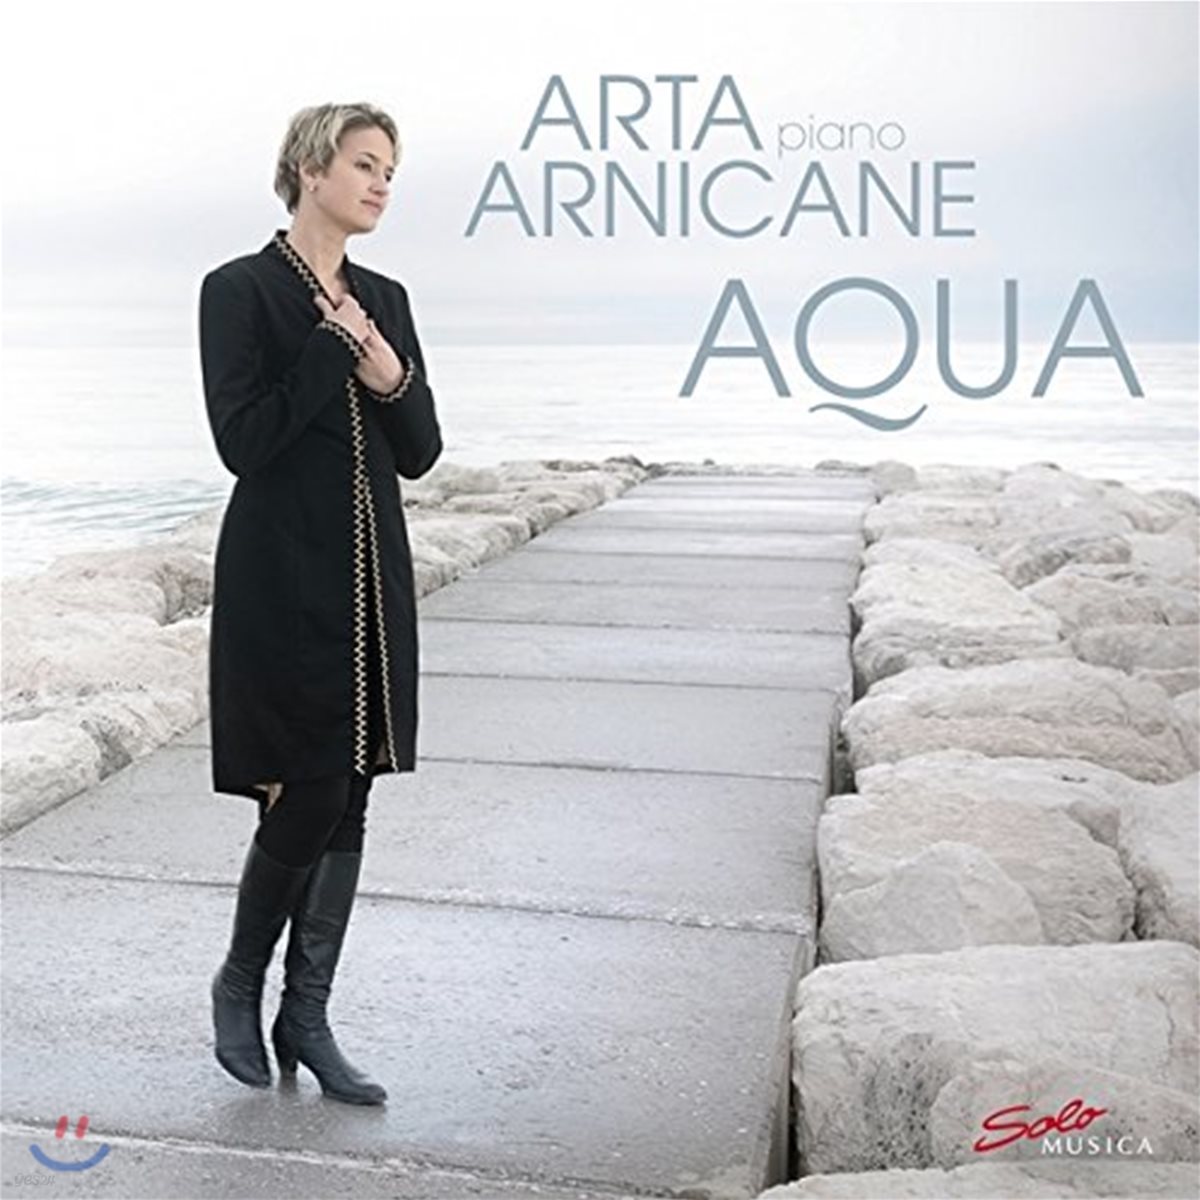 Arta Arnicane 아쿠아 - 라벨 / 리스트 / 드뷔시 / 베리오 / 쇼팽: 피아노 작품집 (Aqua - Ravel / Liszt / Debussy / Berio / Chopin / Vitols) 아르타 아르니카네